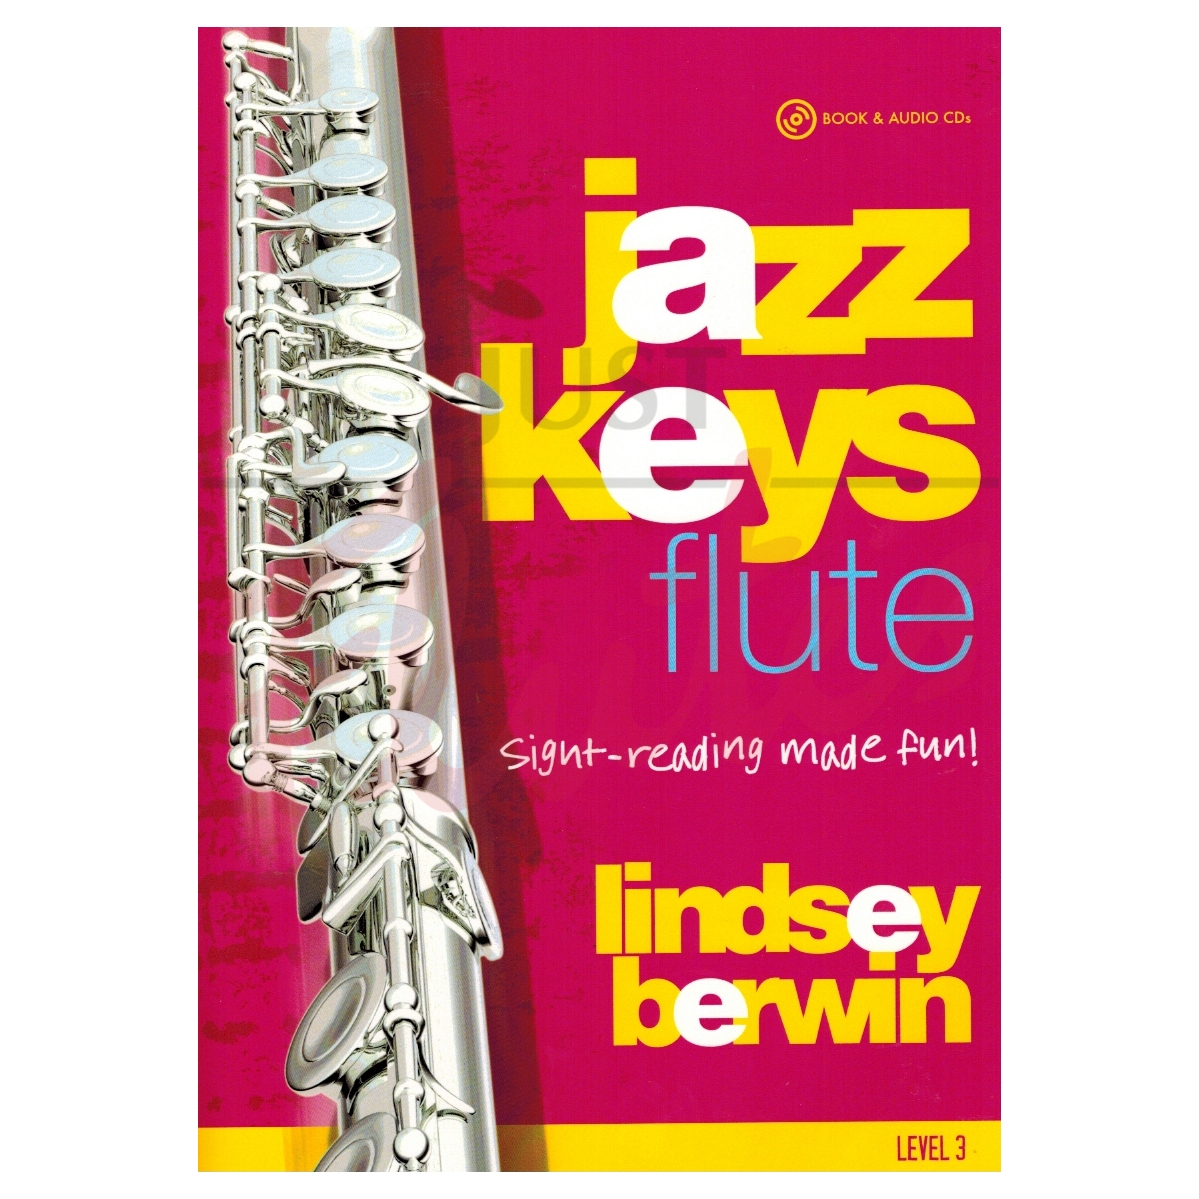 Jazz Keys - Flute Level 3 Sight-Reading Made Fun!